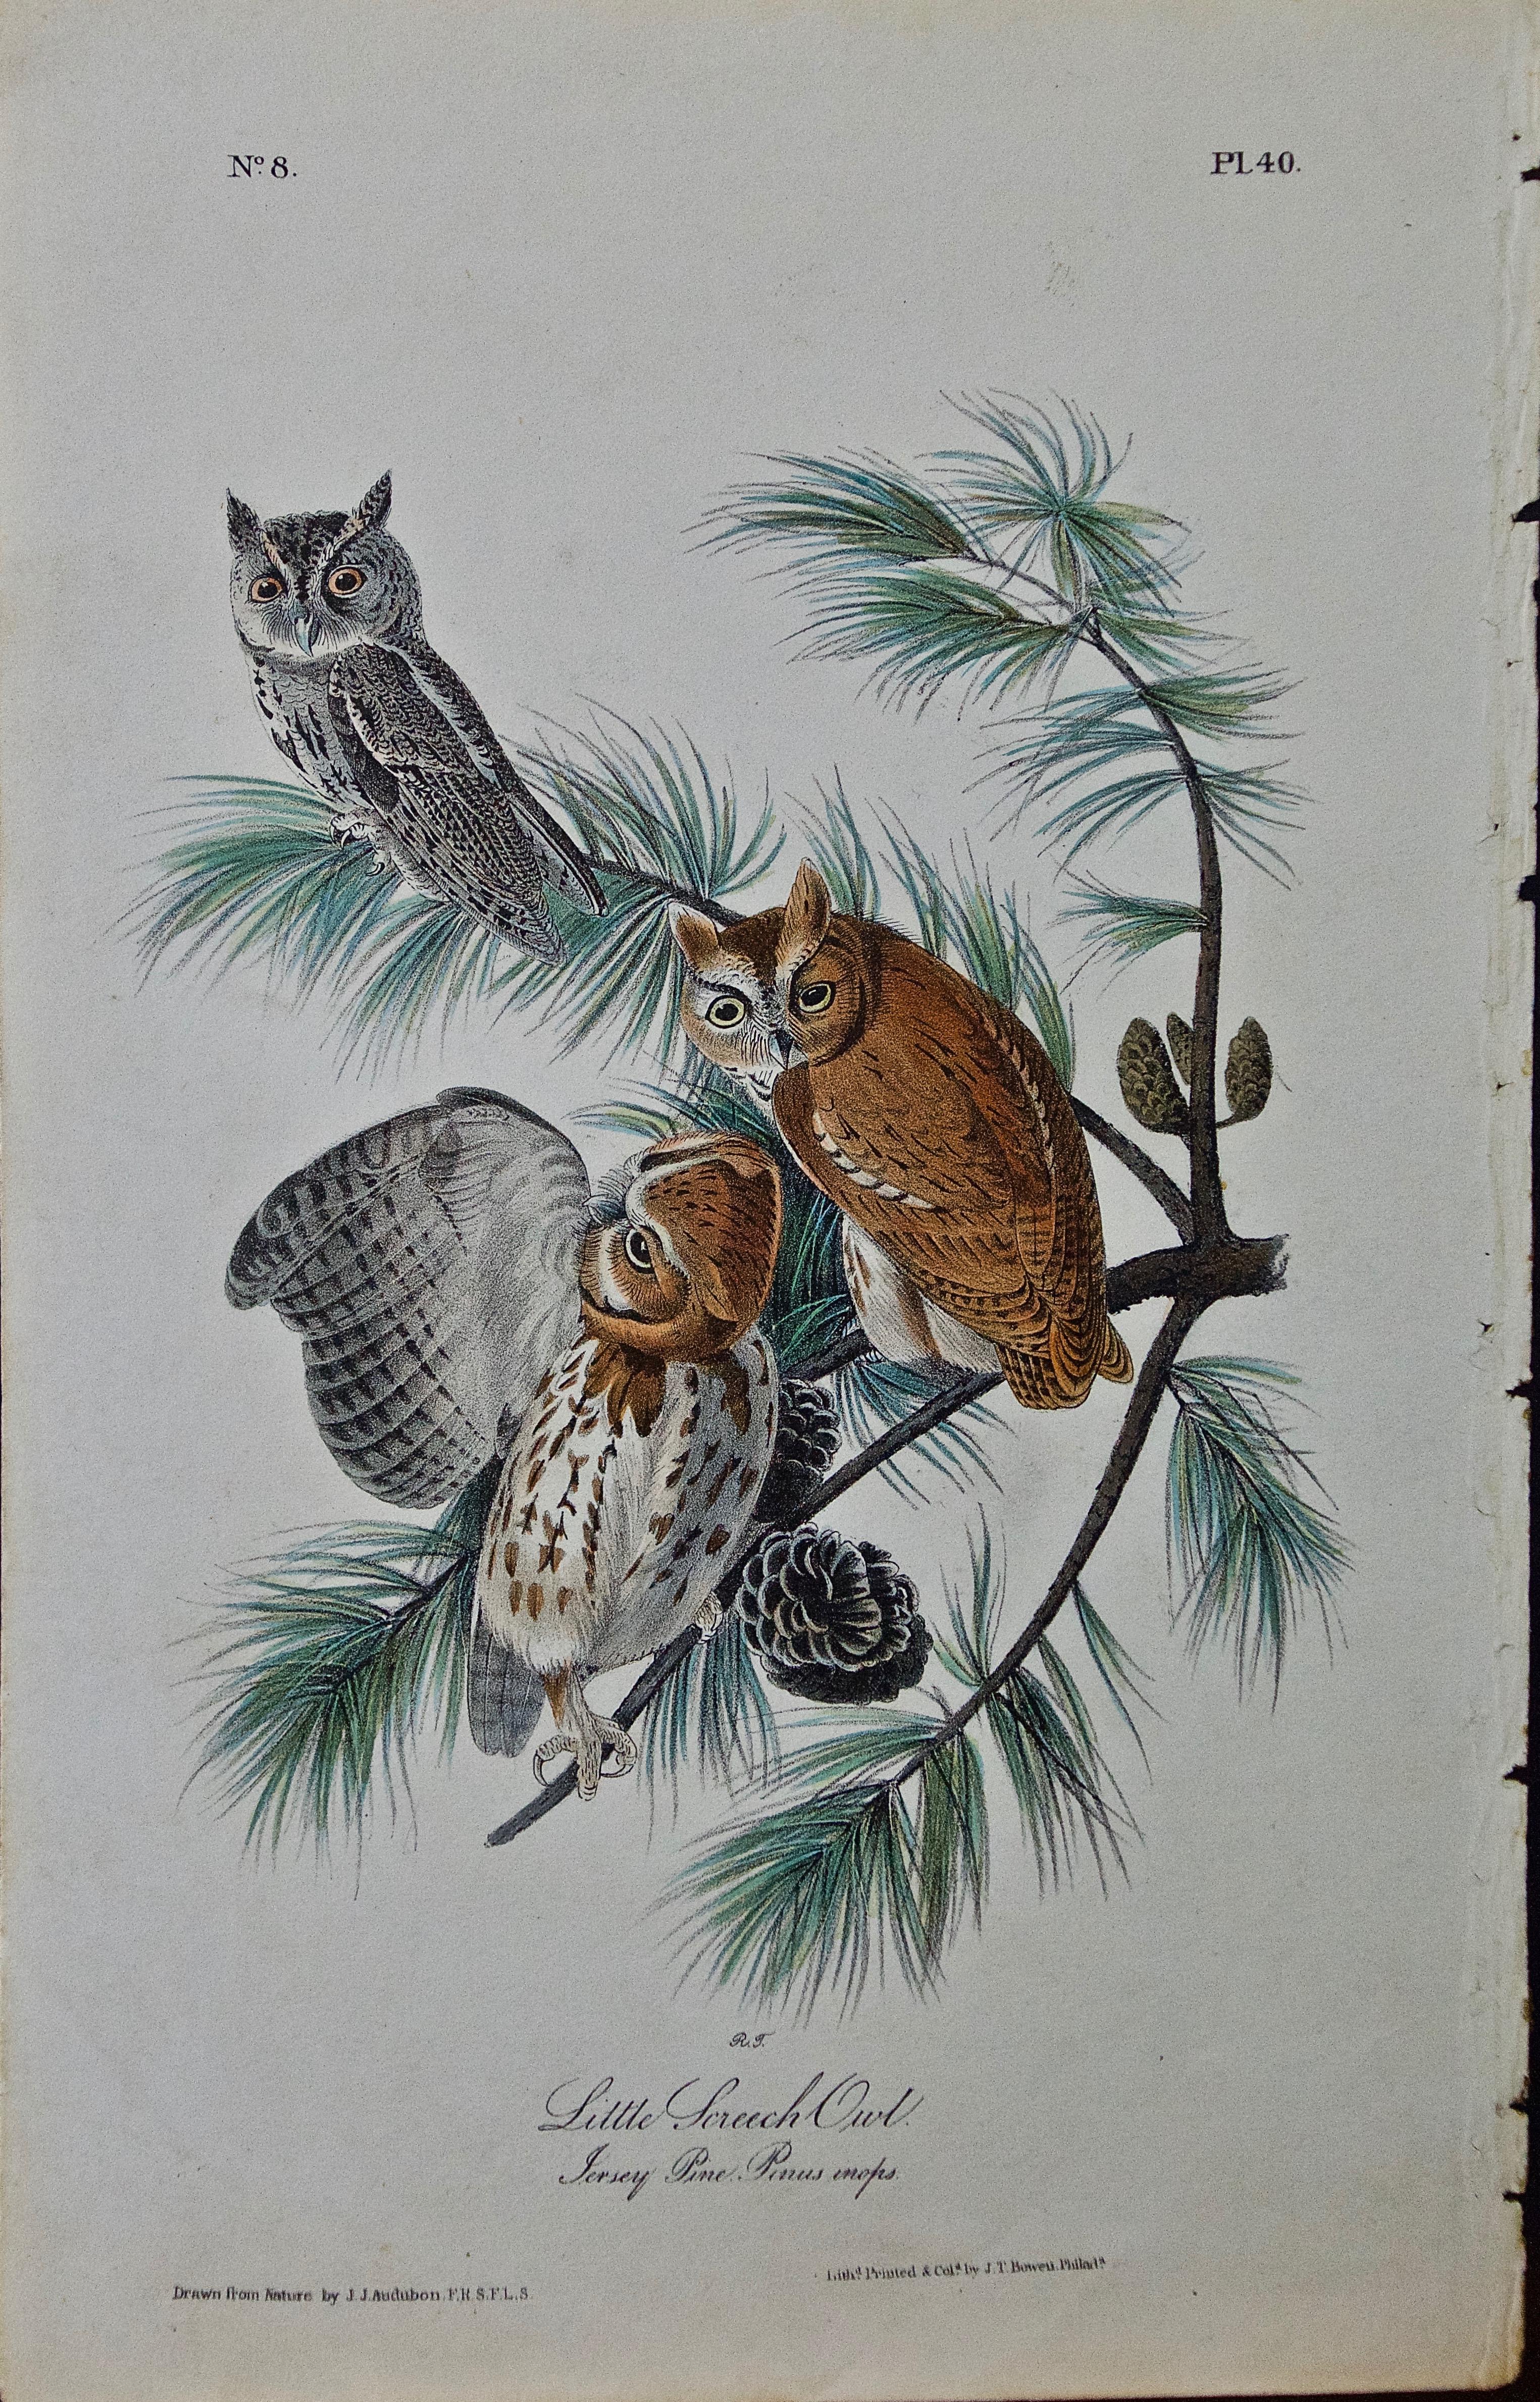 John James Audubon Animal Print - Original Audubon Hand Colored Bird Lithograph of "Little Screech Owl" 